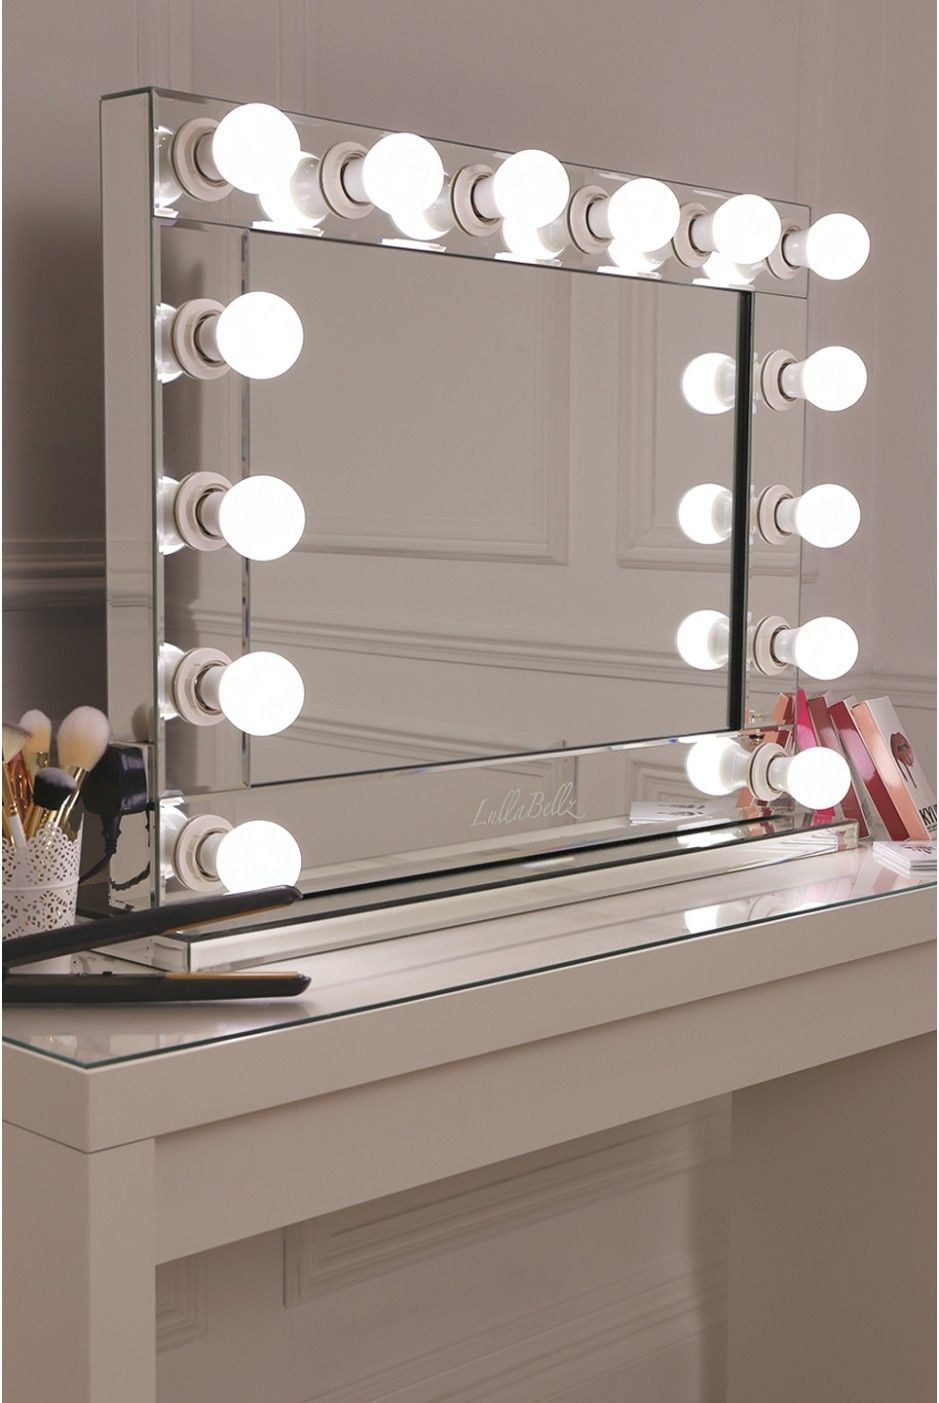 DIY Hollywood Lighted Vanity Mirror
 DIY Vanity Mirror With Lights for Bathroom and Makeup